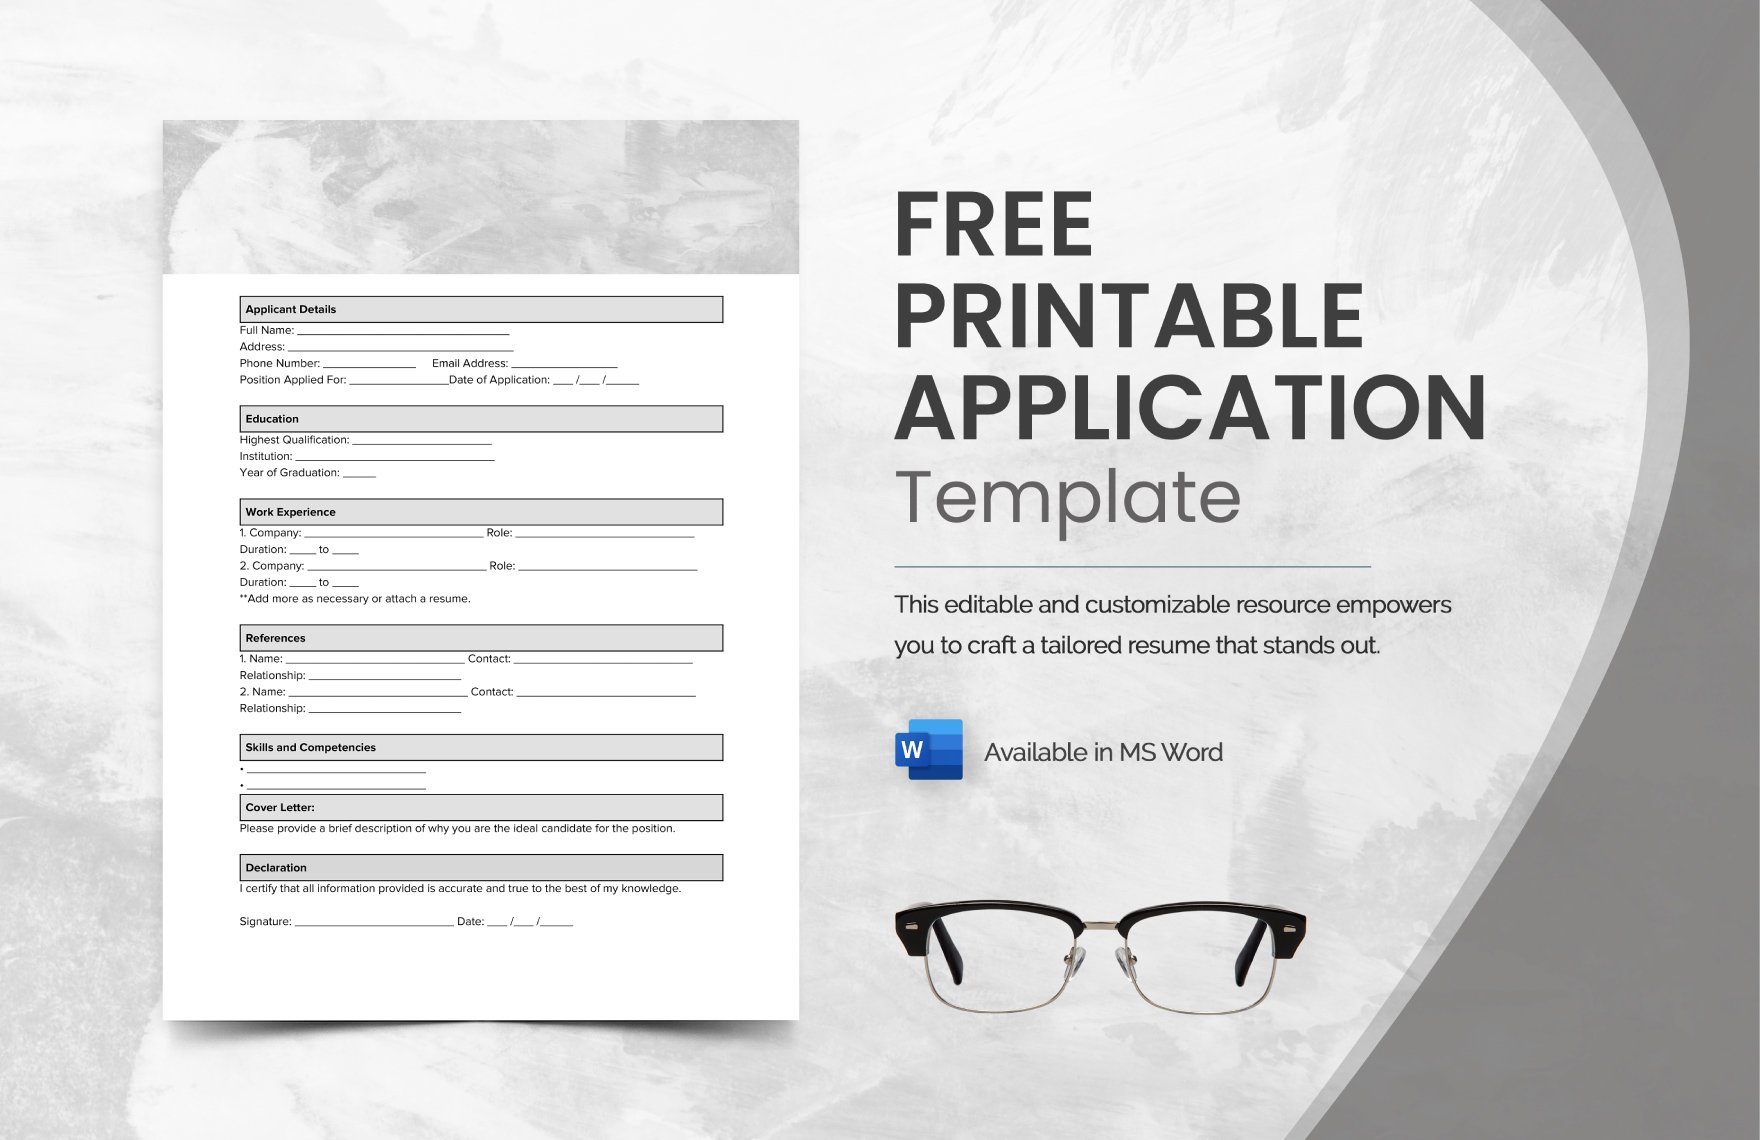 Free Printable Application Template